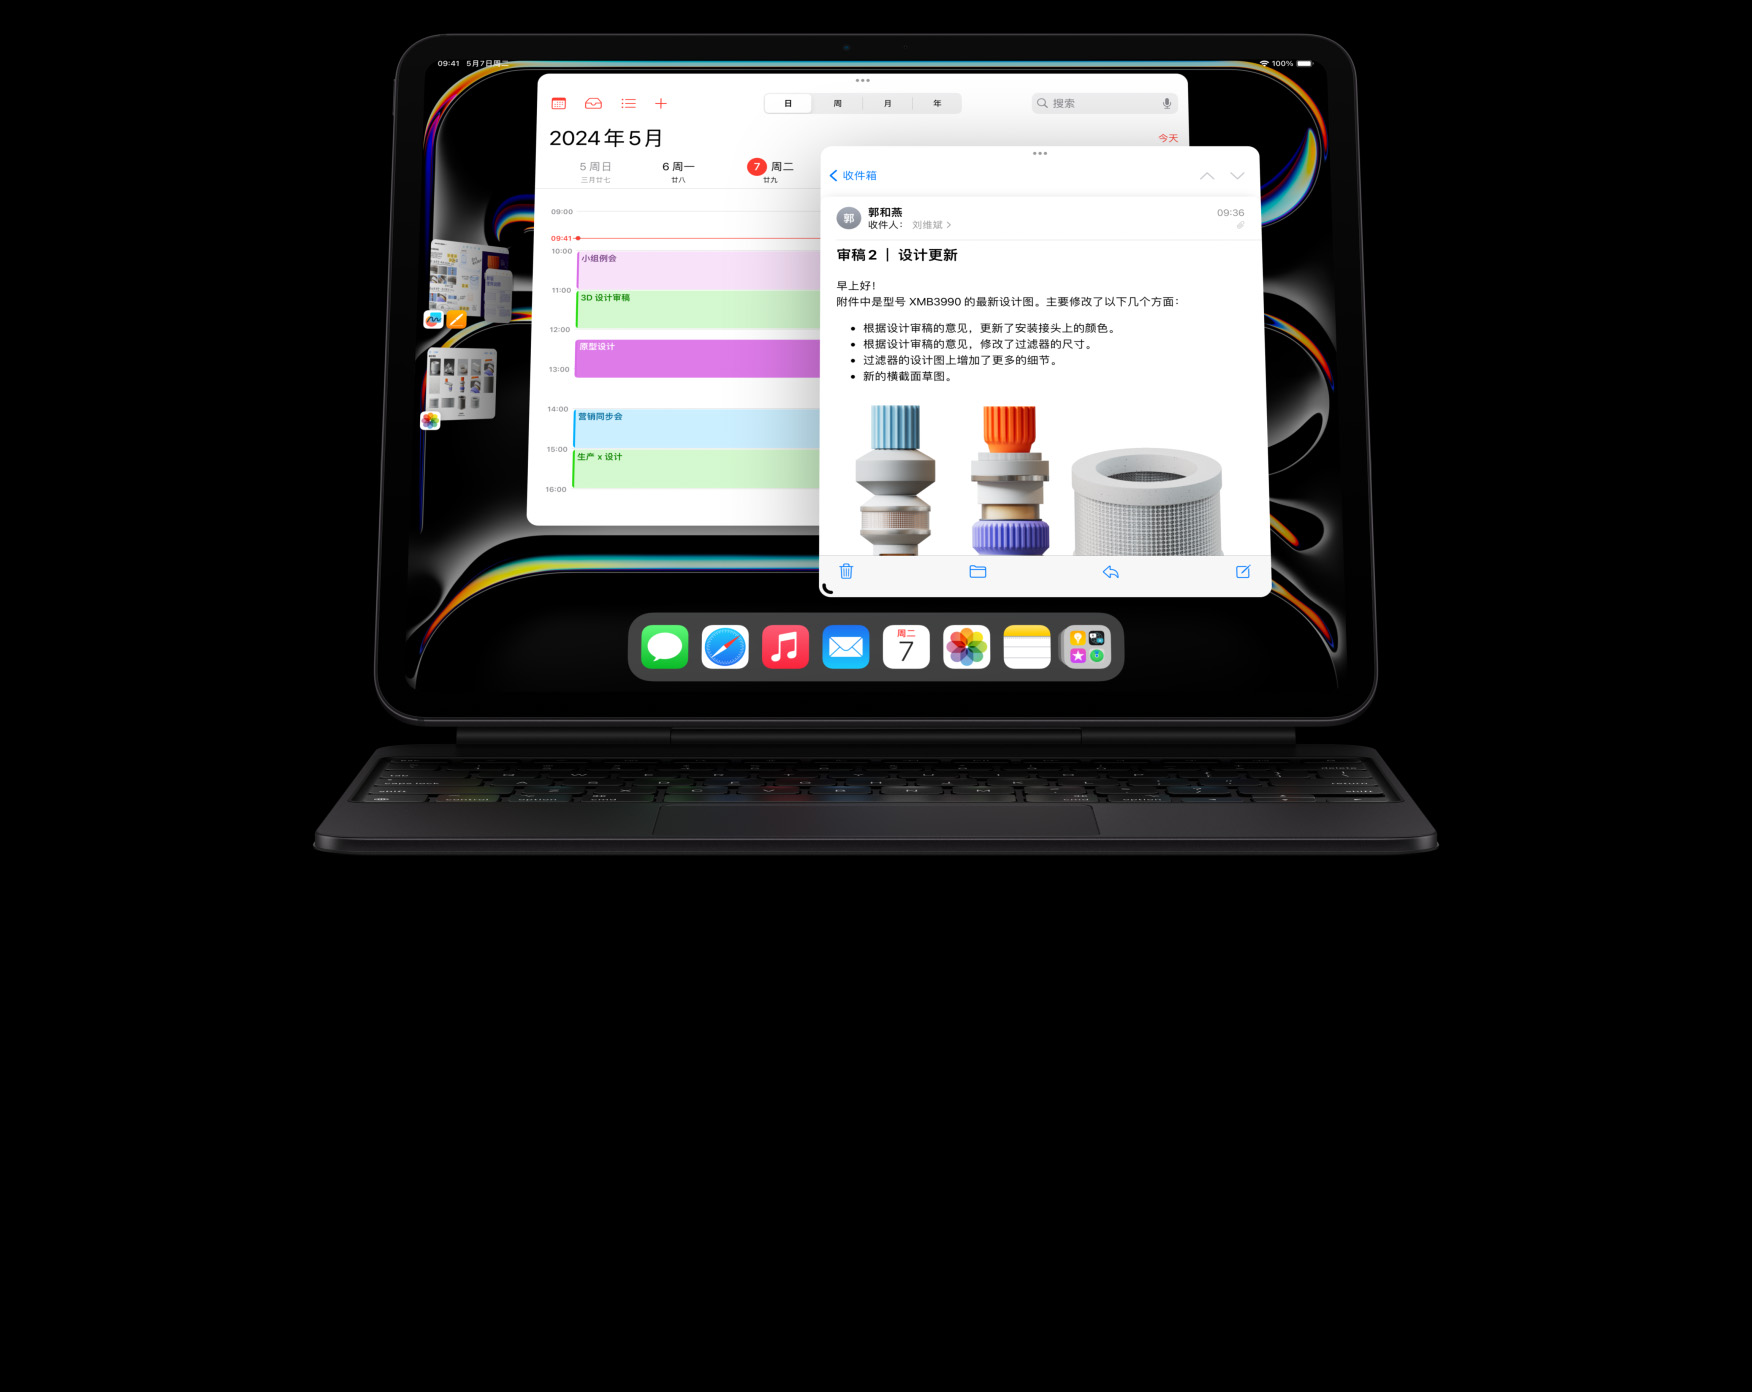 iPad Pro 与妙控键盘相连，横屏放置，用户已打开多个 app 进行多任务处理。